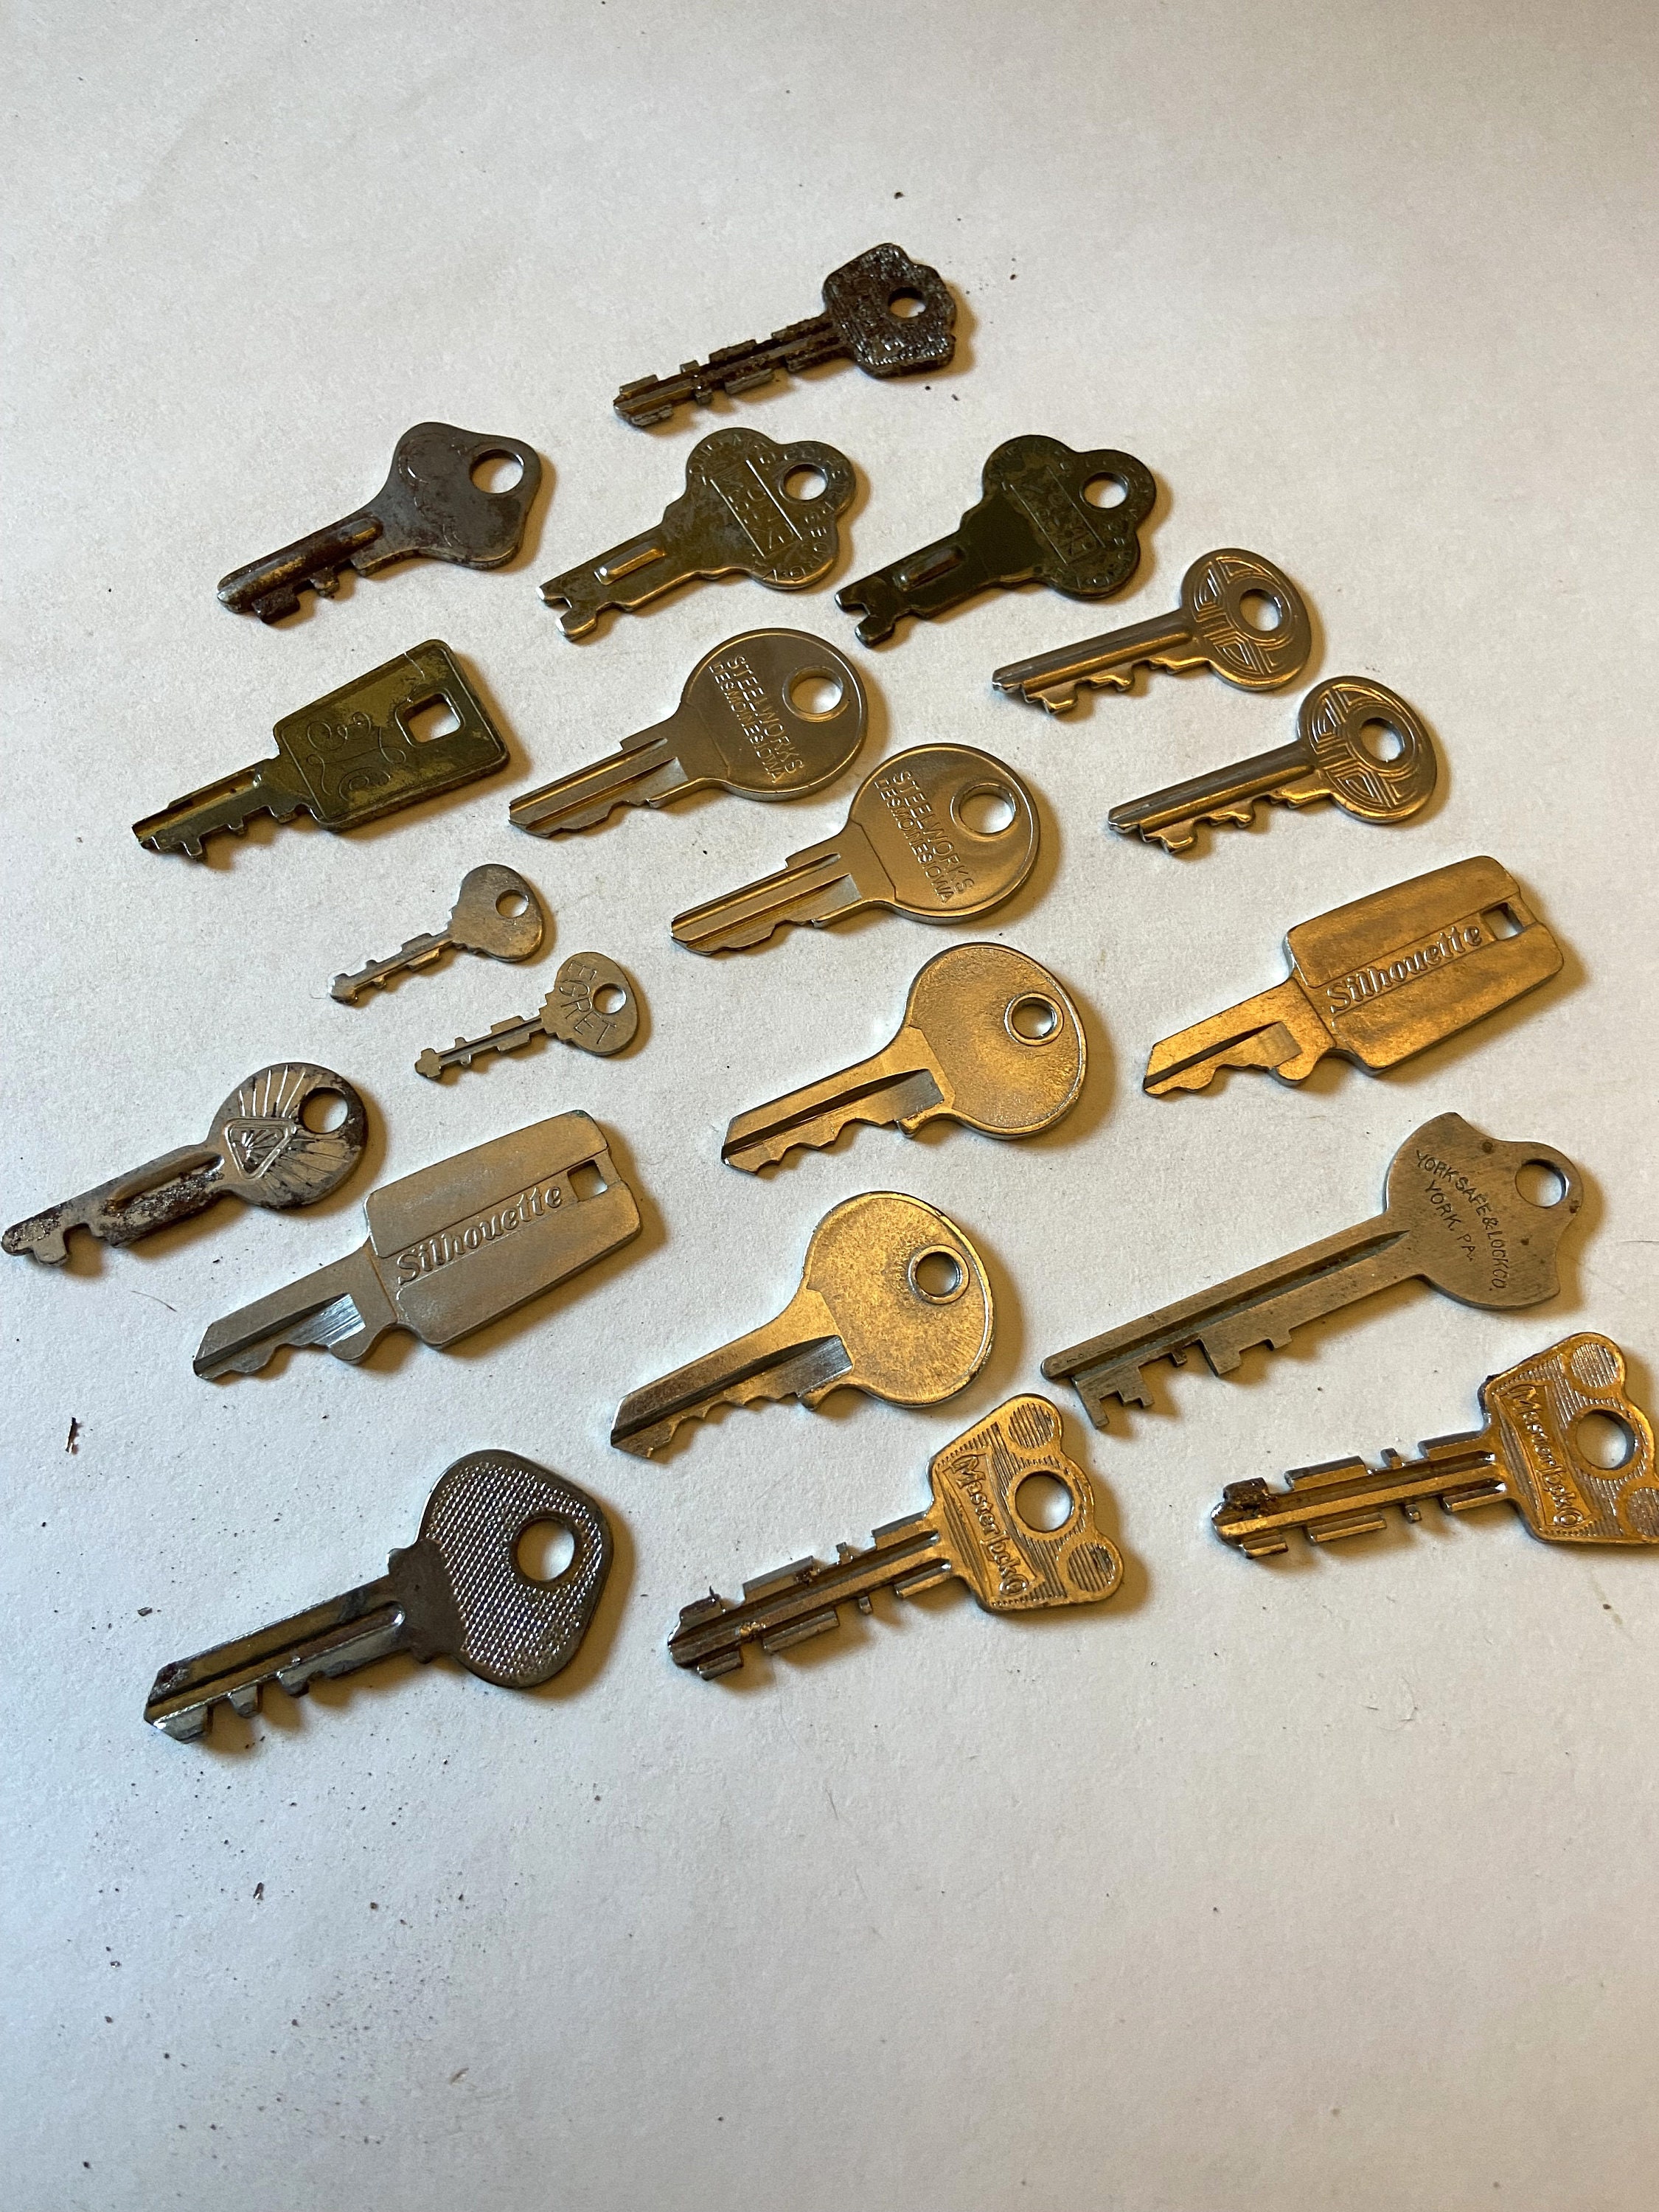 Vintage Skeleton Keys, Antique Keys, Set of 3 Steampunk Keys, French Old  Keys, Shabby Chic Decor, Industrial Style, Key Collection, 1920s 